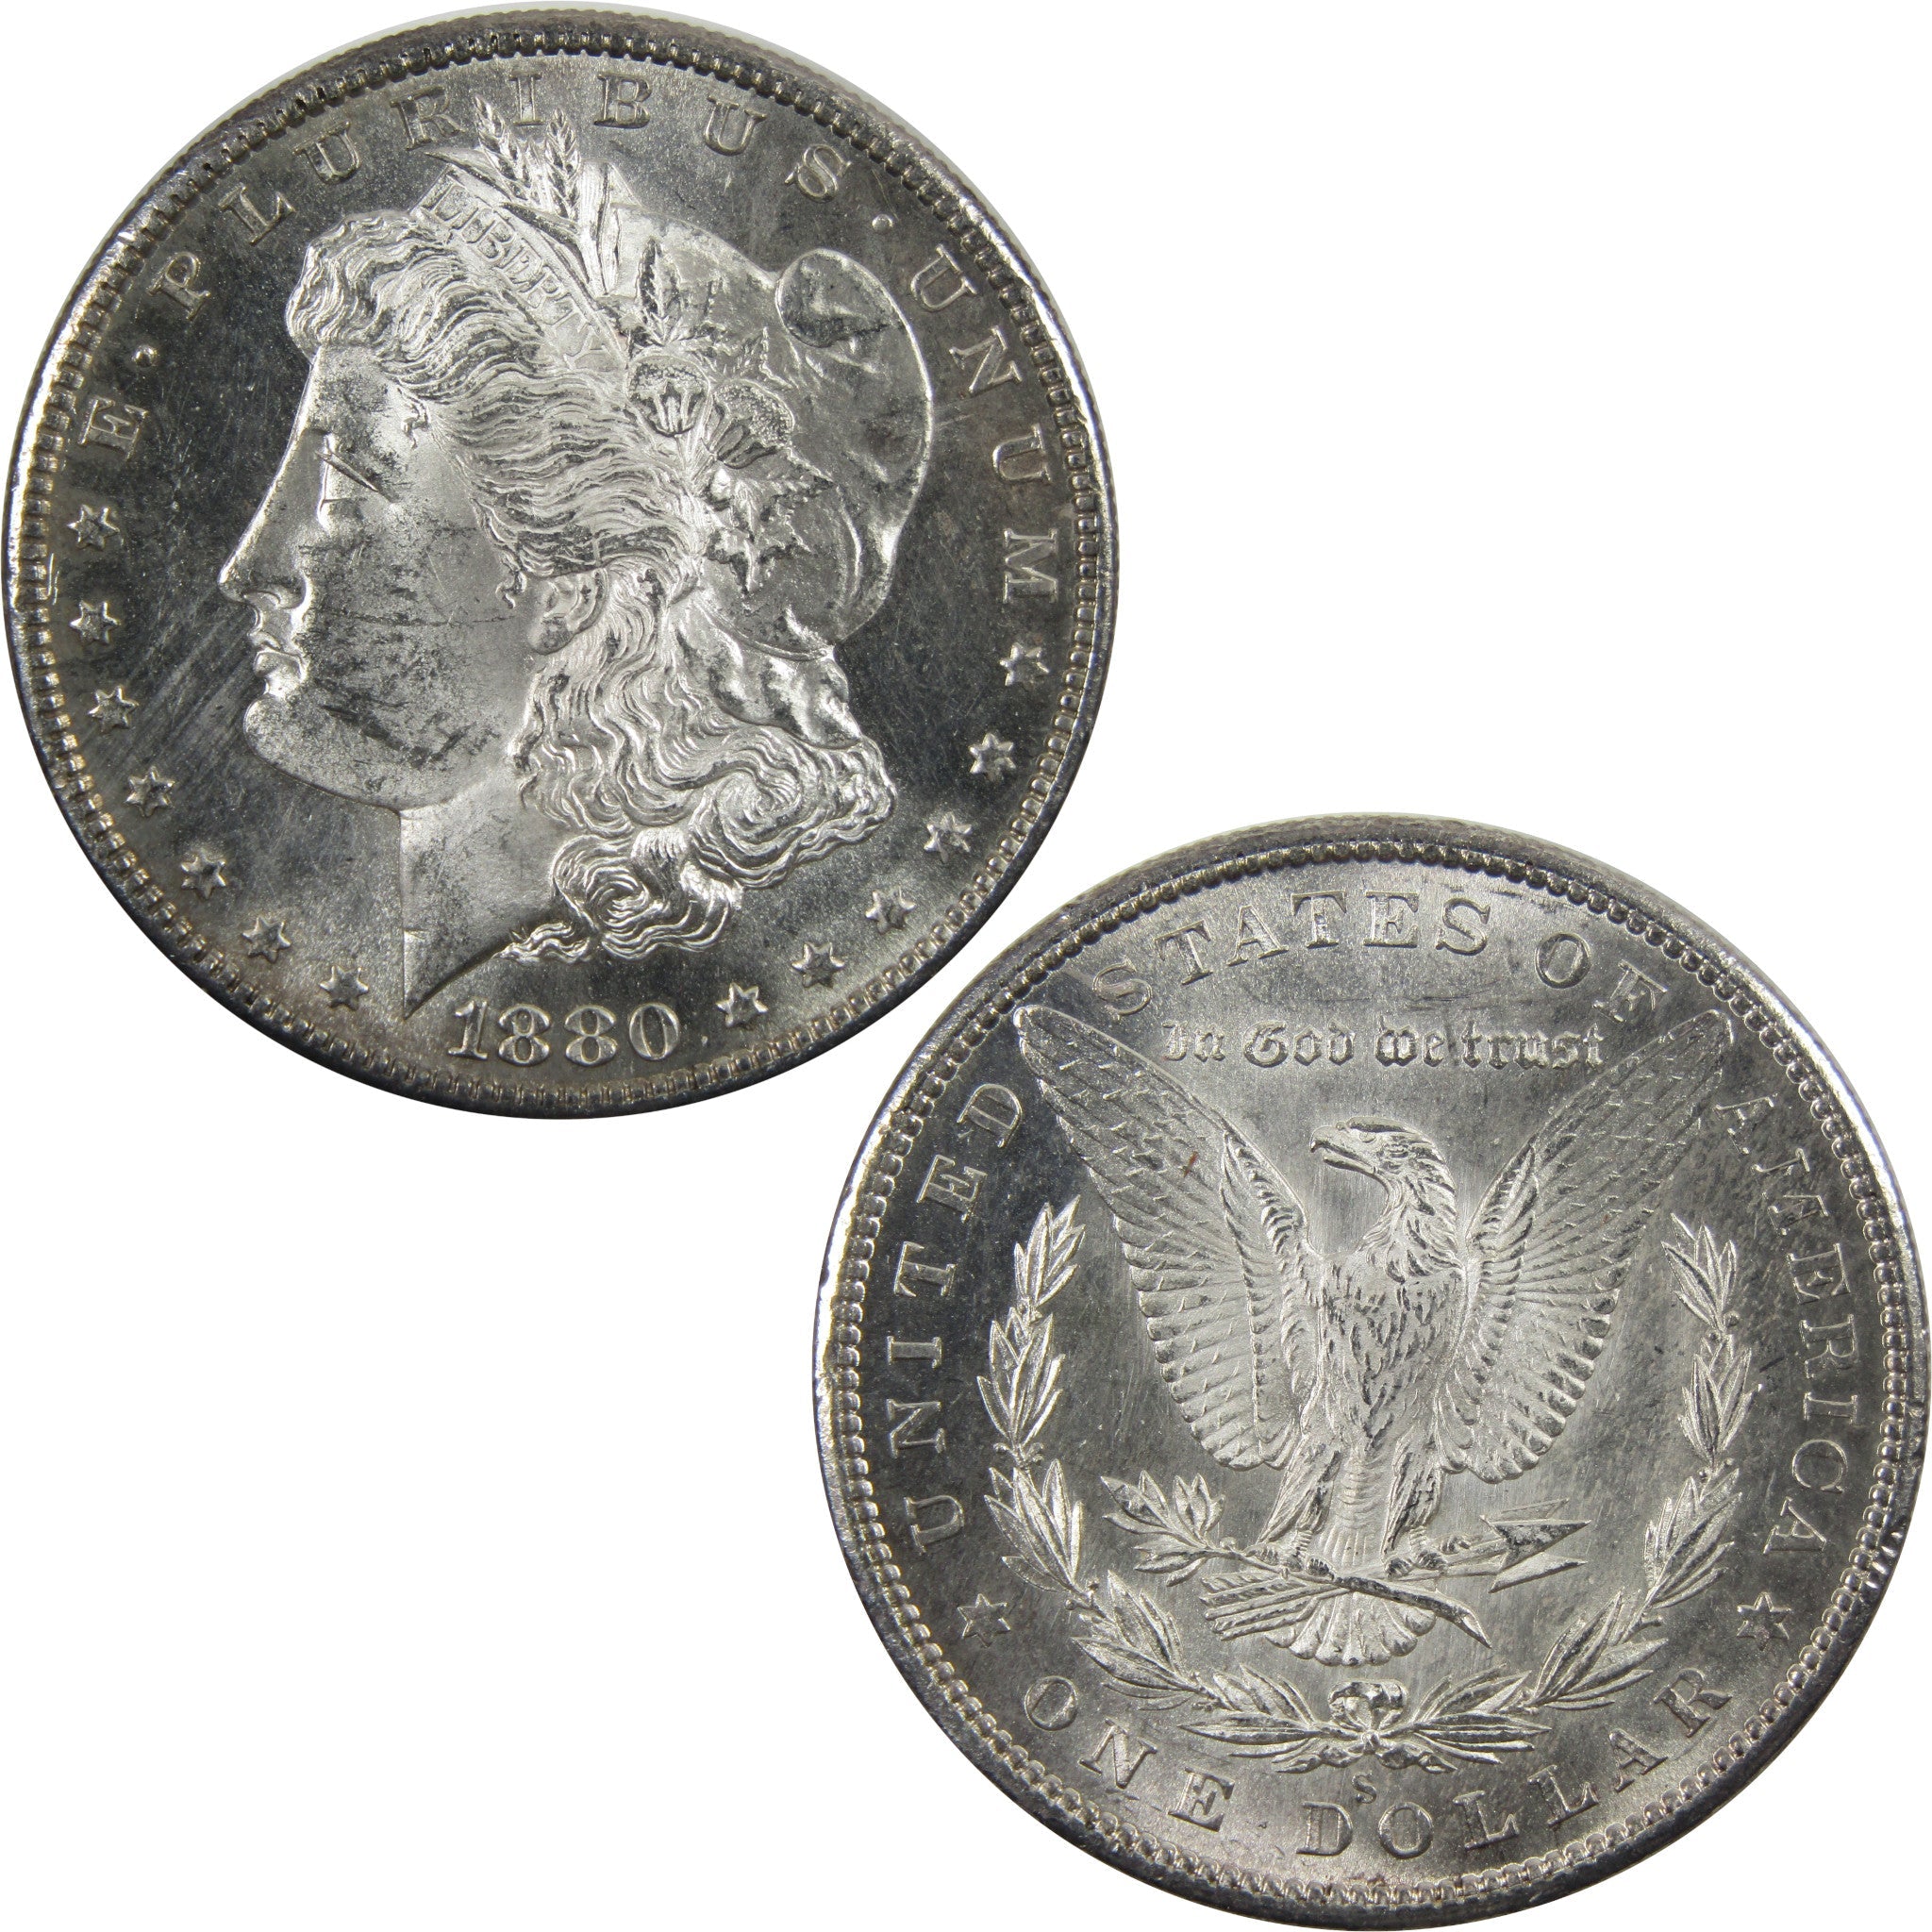 1880 S Morgan Dollar BU Uncirculated 90% Silver $1 Coin SKU:I5439 - Morgan coin - Morgan silver dollar - Morgan silver dollar for sale - Profile Coins &amp; Collectibles